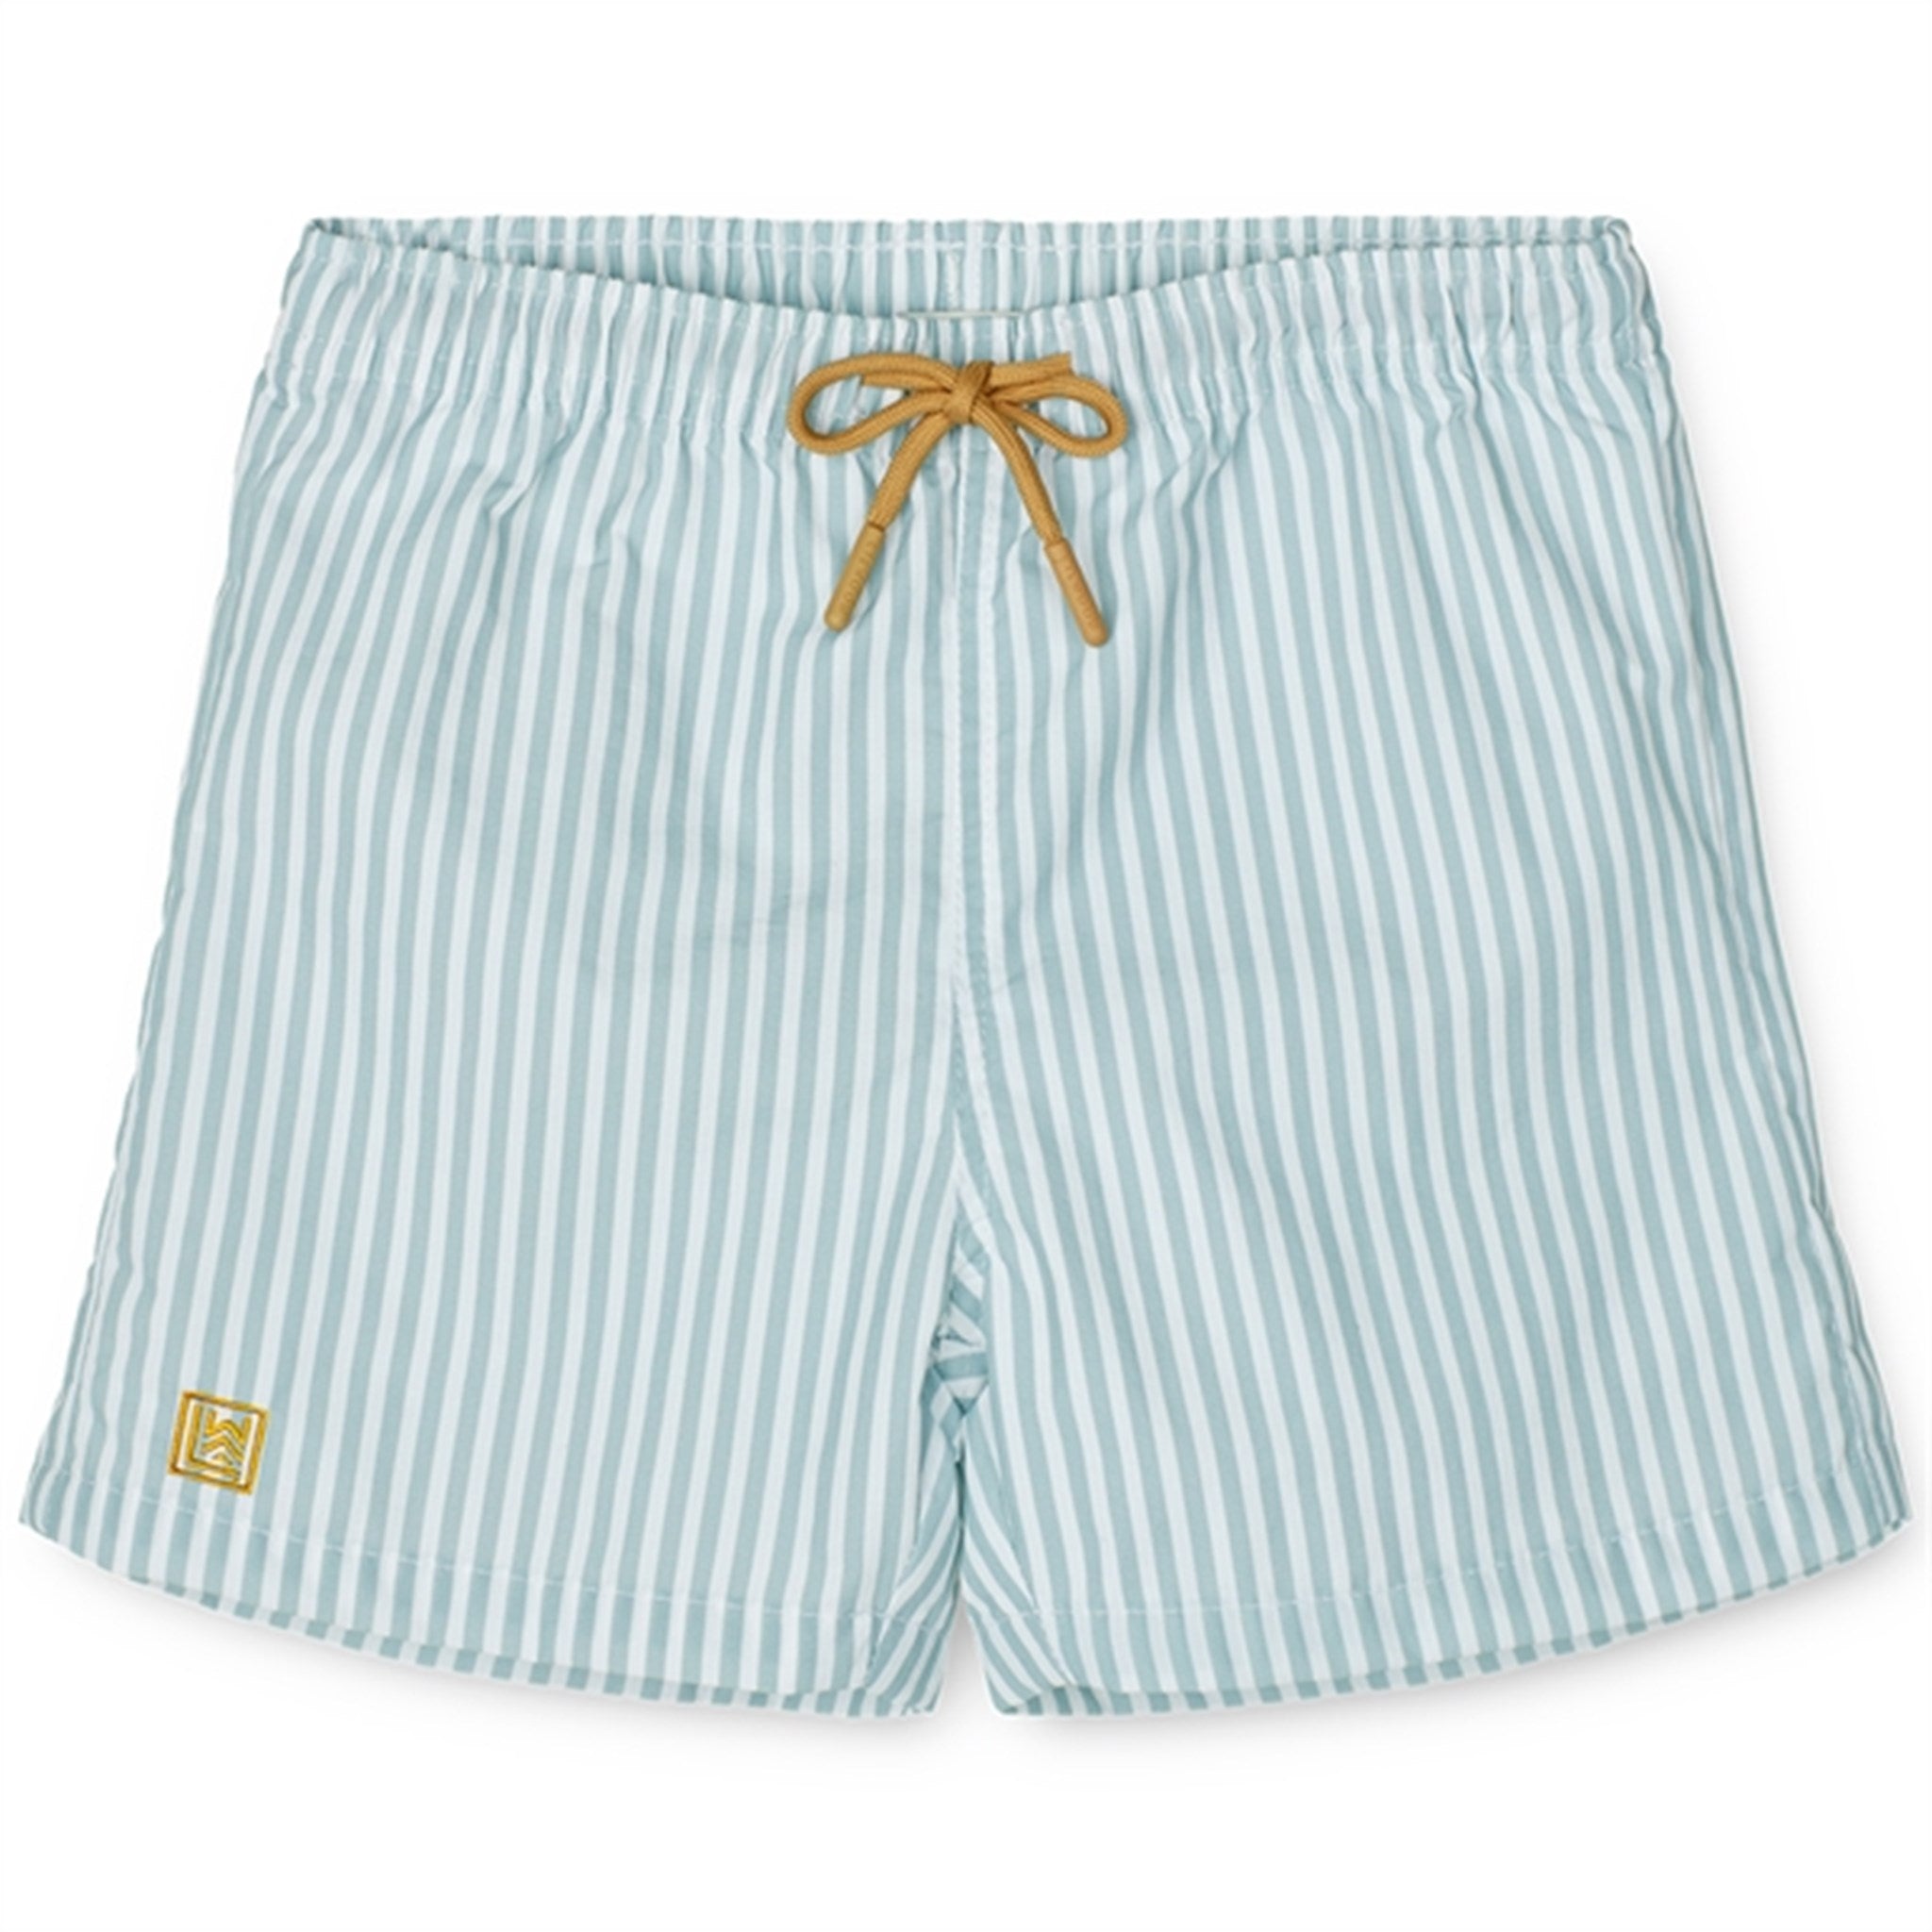 Liewood Duke Board Shorts Stripe Sea Blue/White